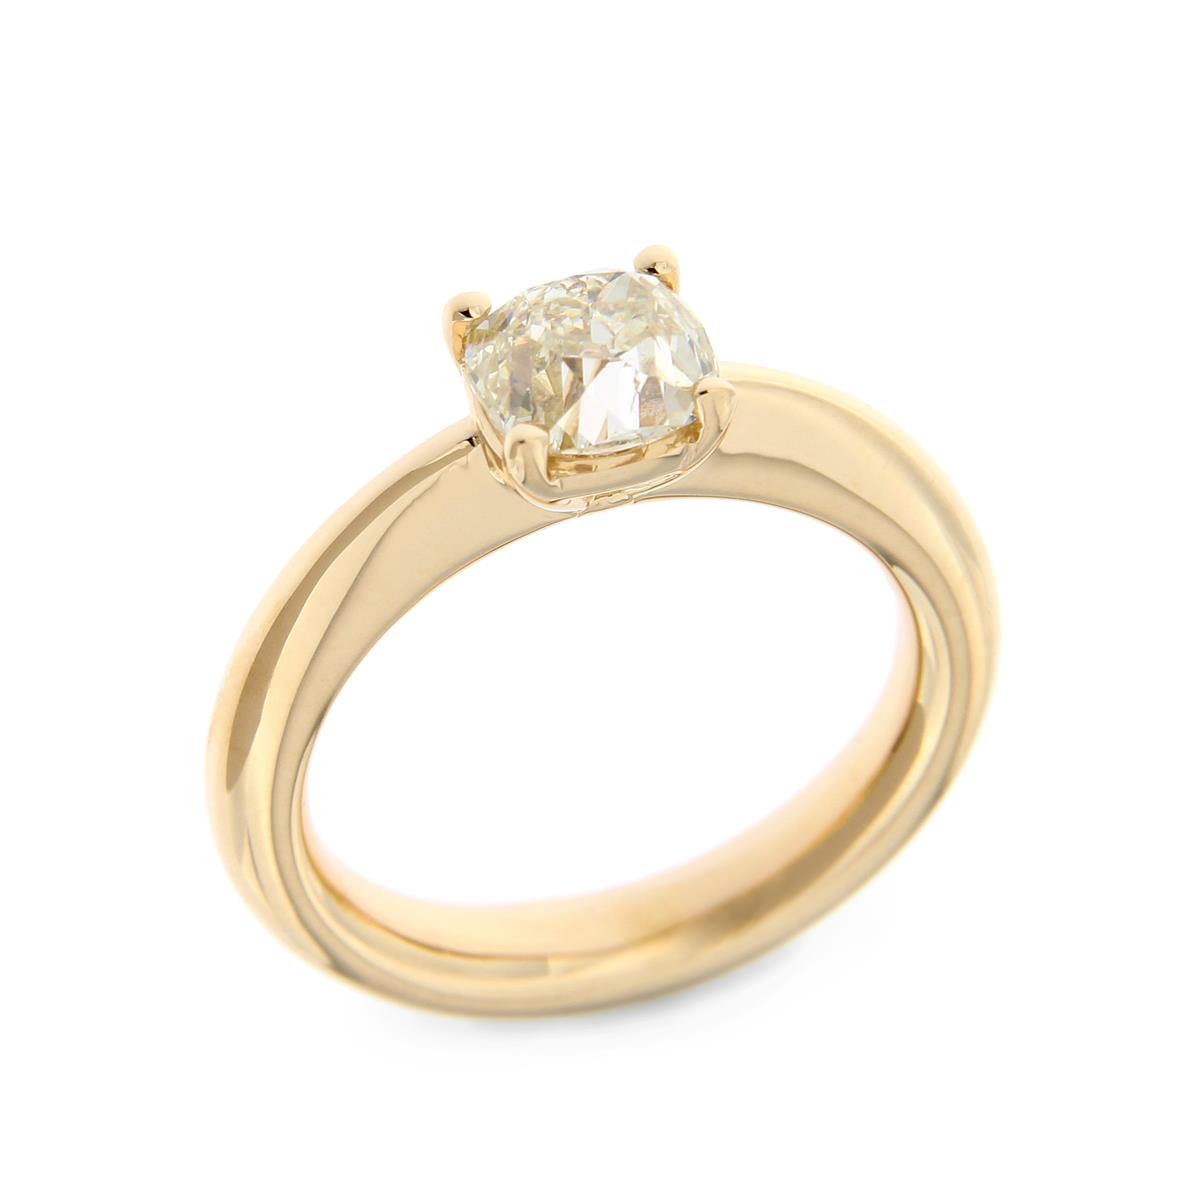 Katie g. Jewellery - Verlobungsring 2 - Roségold mit Cushion Cut Diamant